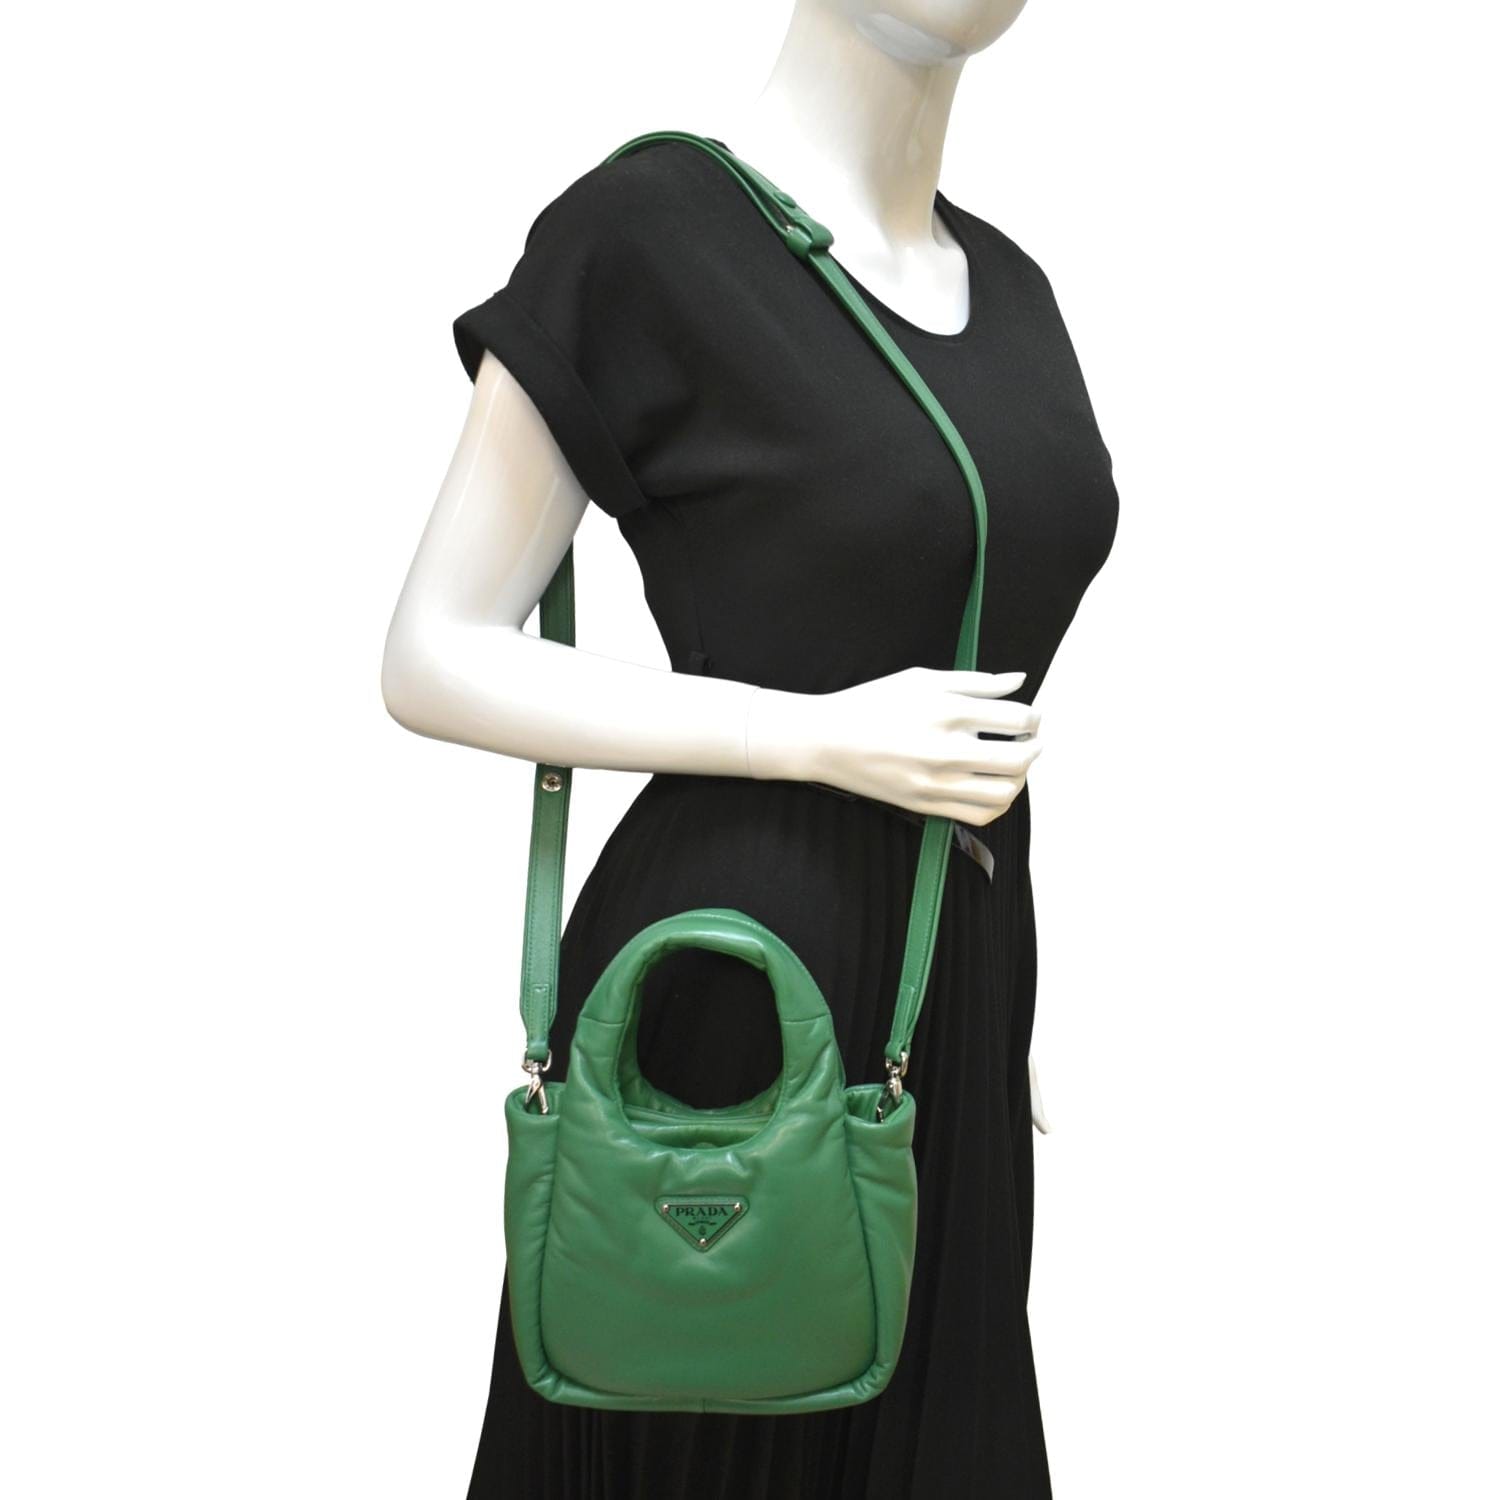 Prada Women's Small Padded Soft Nappa-leather Bag